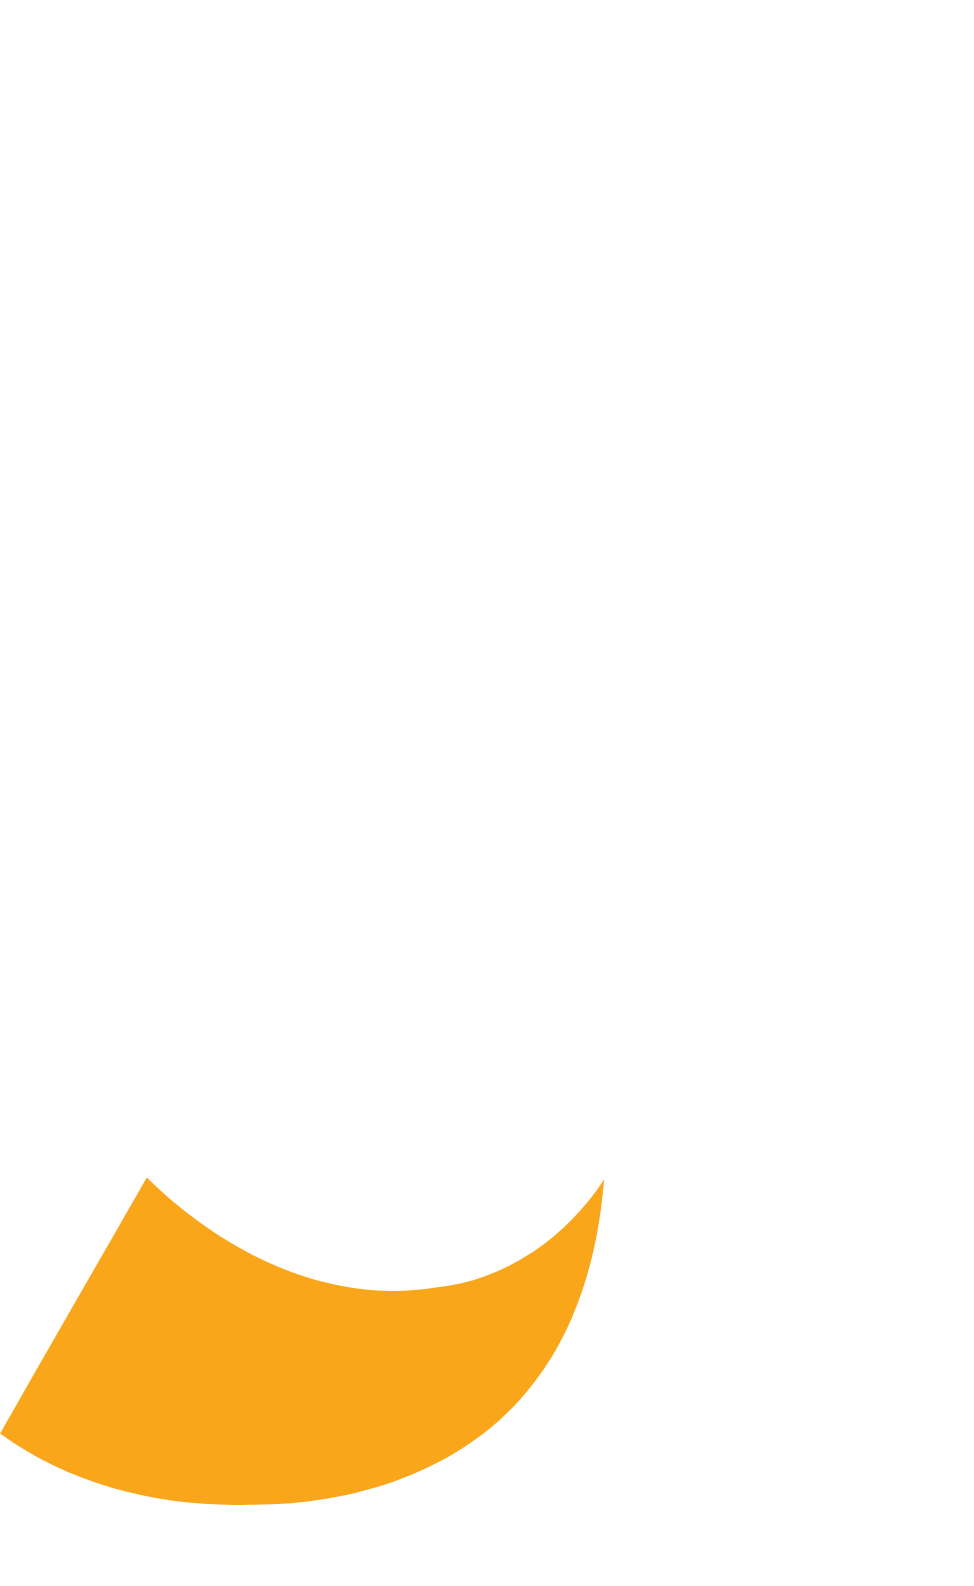 JanOne logo for dark backgrounds (transparent PNG)